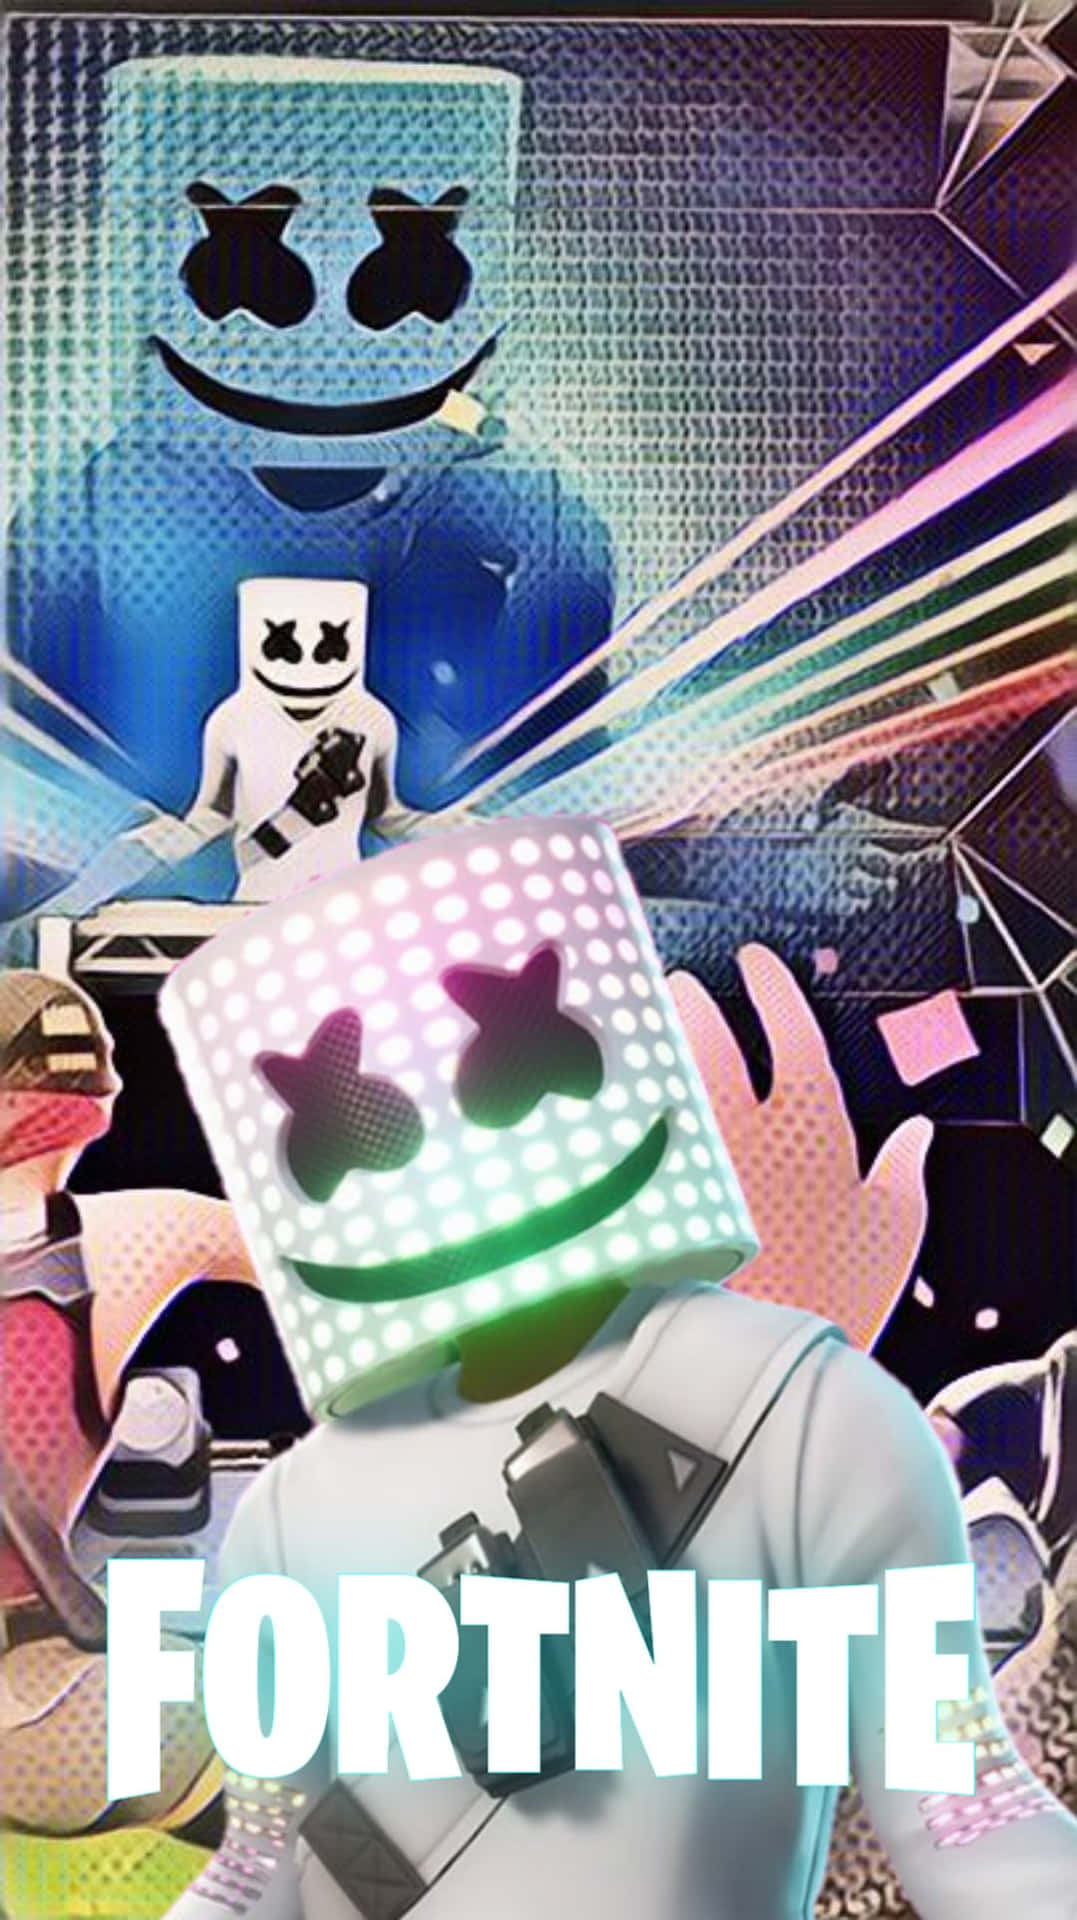 Marshmello deltager Fortnite-spillere i den virtuelle verden af kamp. Wallpaper